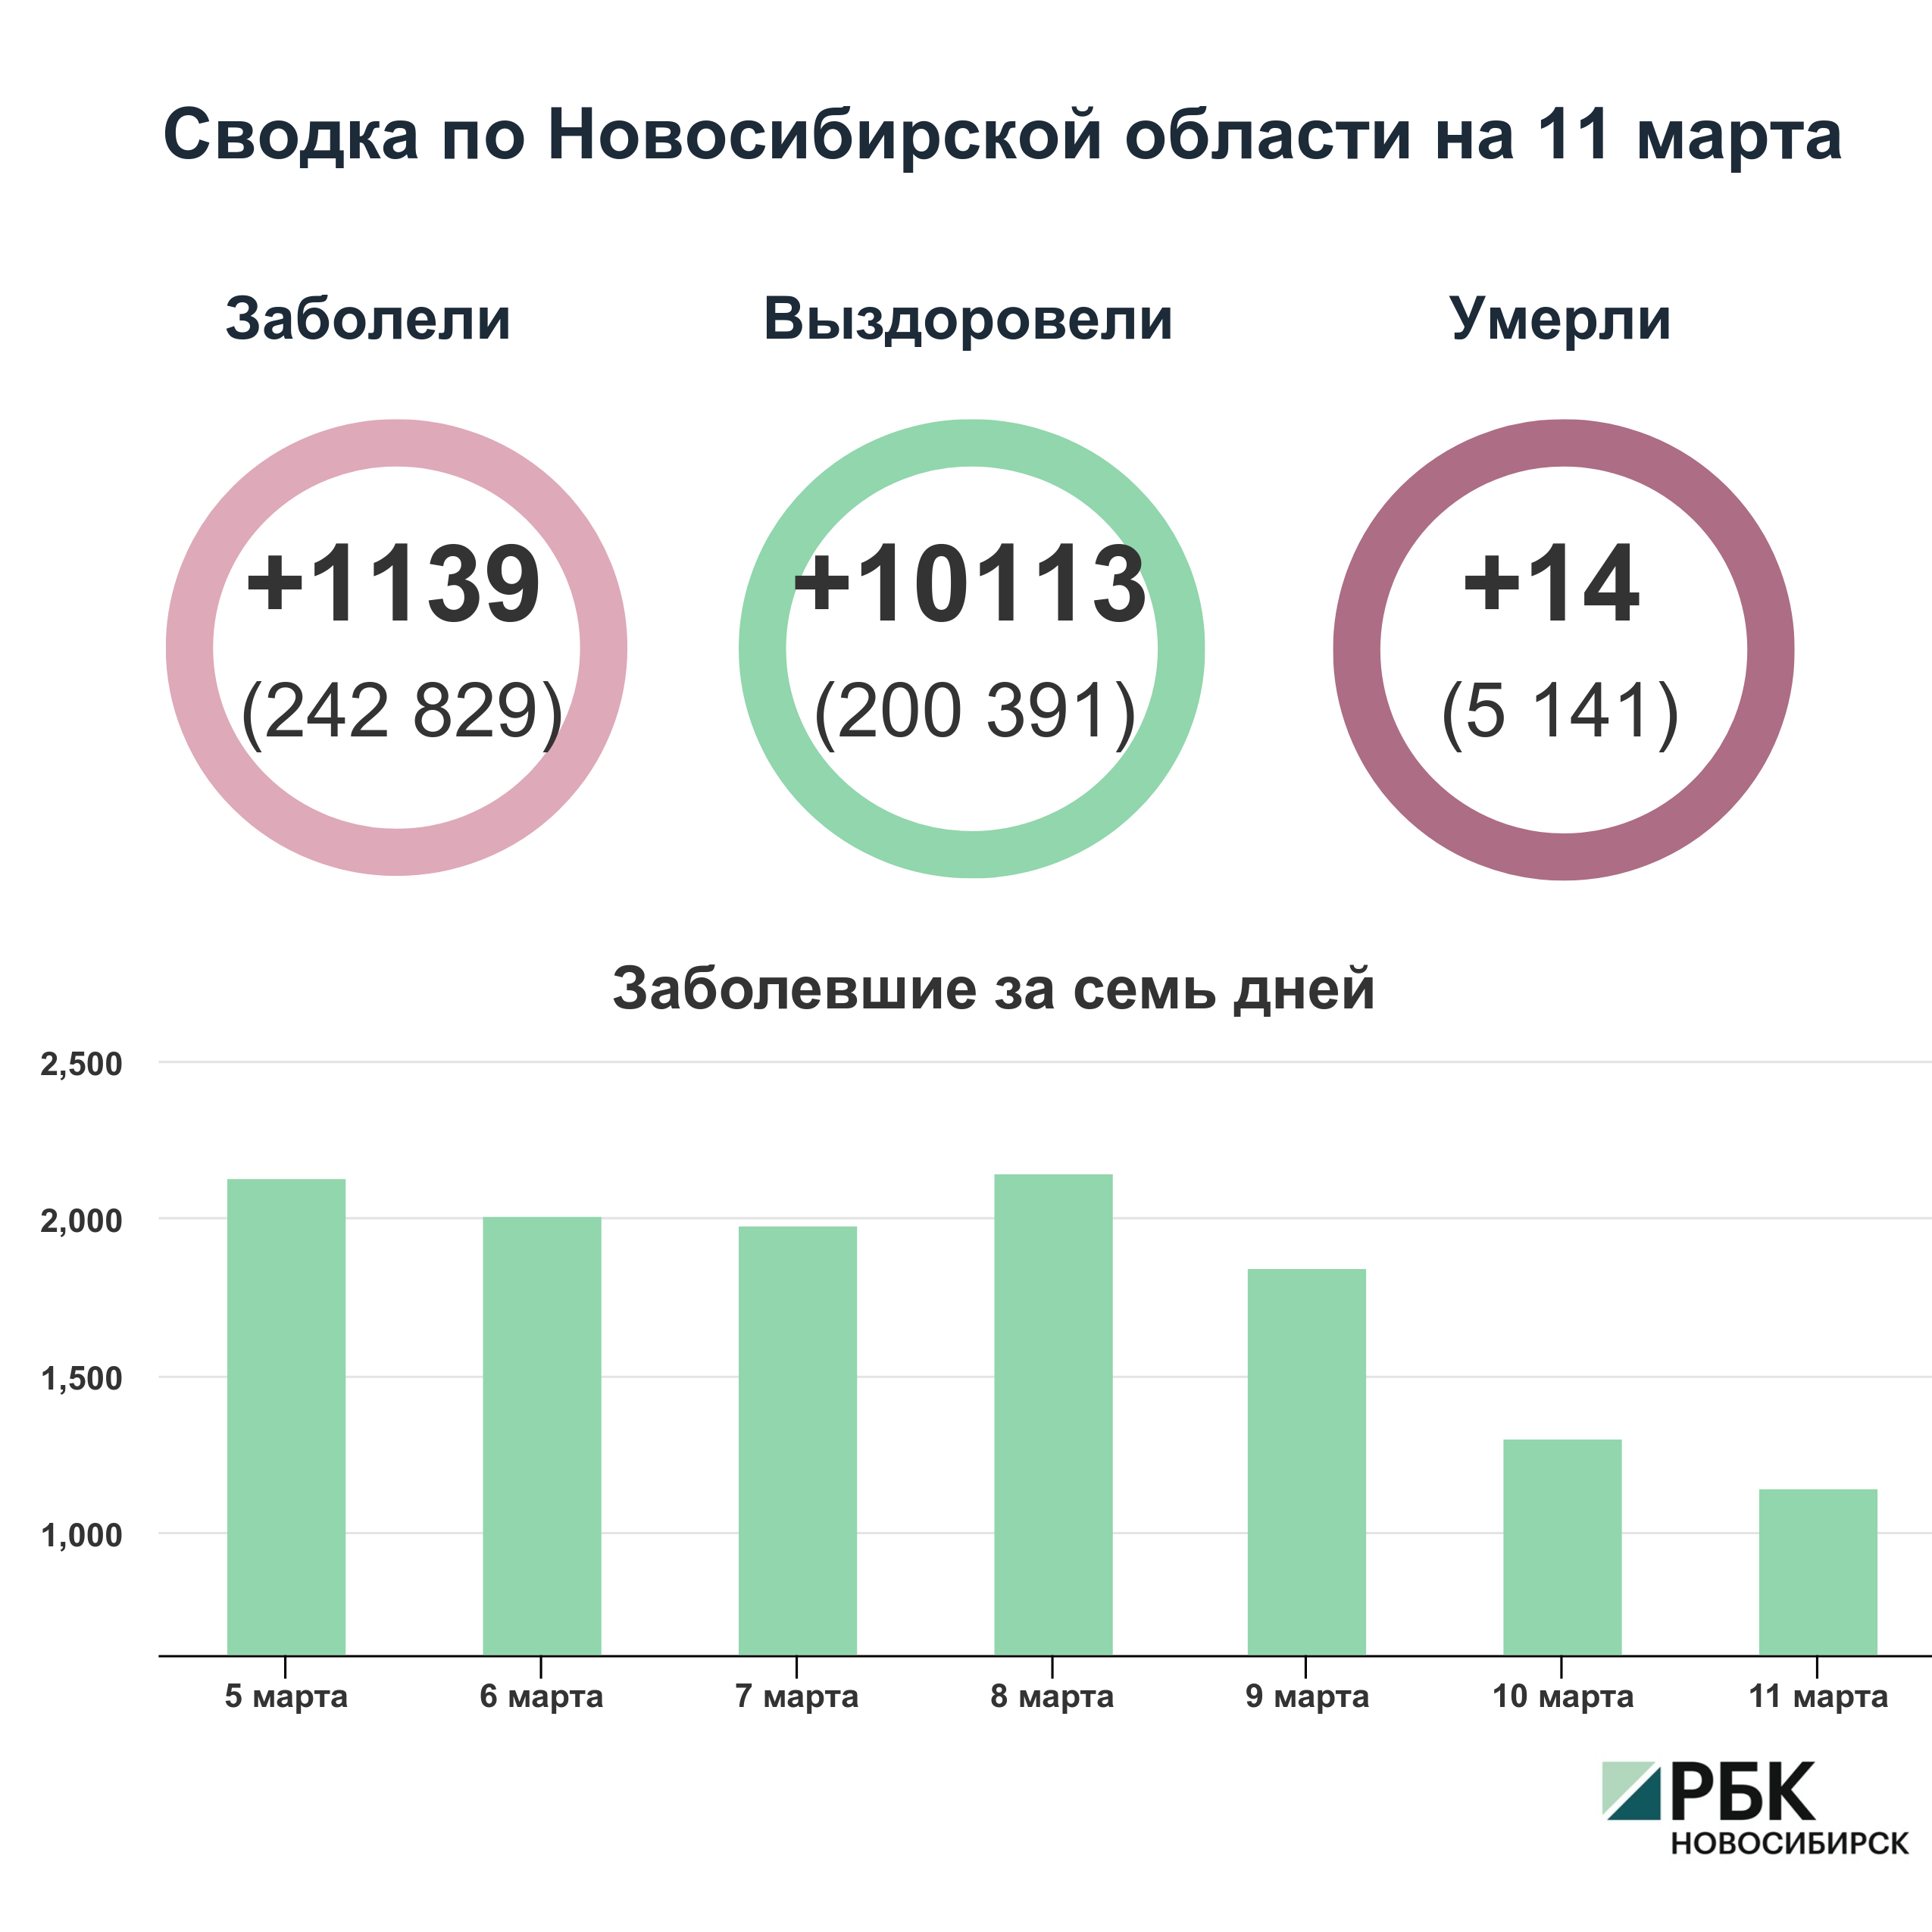 Коронавирус в Новосибирске:сводка на 11 марта